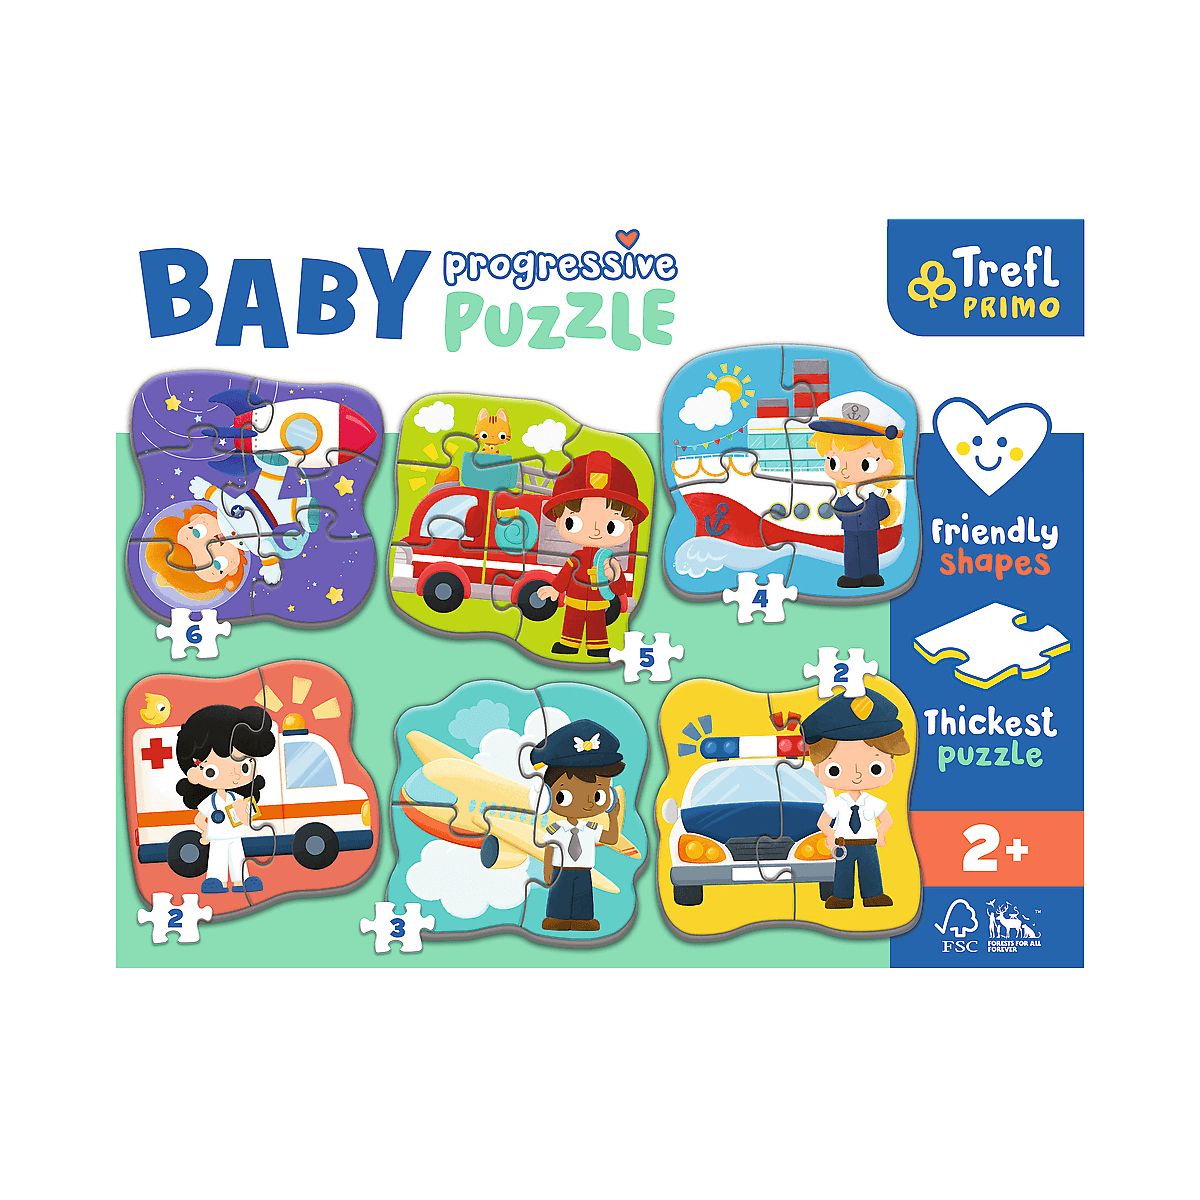 Puzzle Trefl baby Zawody i pojazdy (44001)